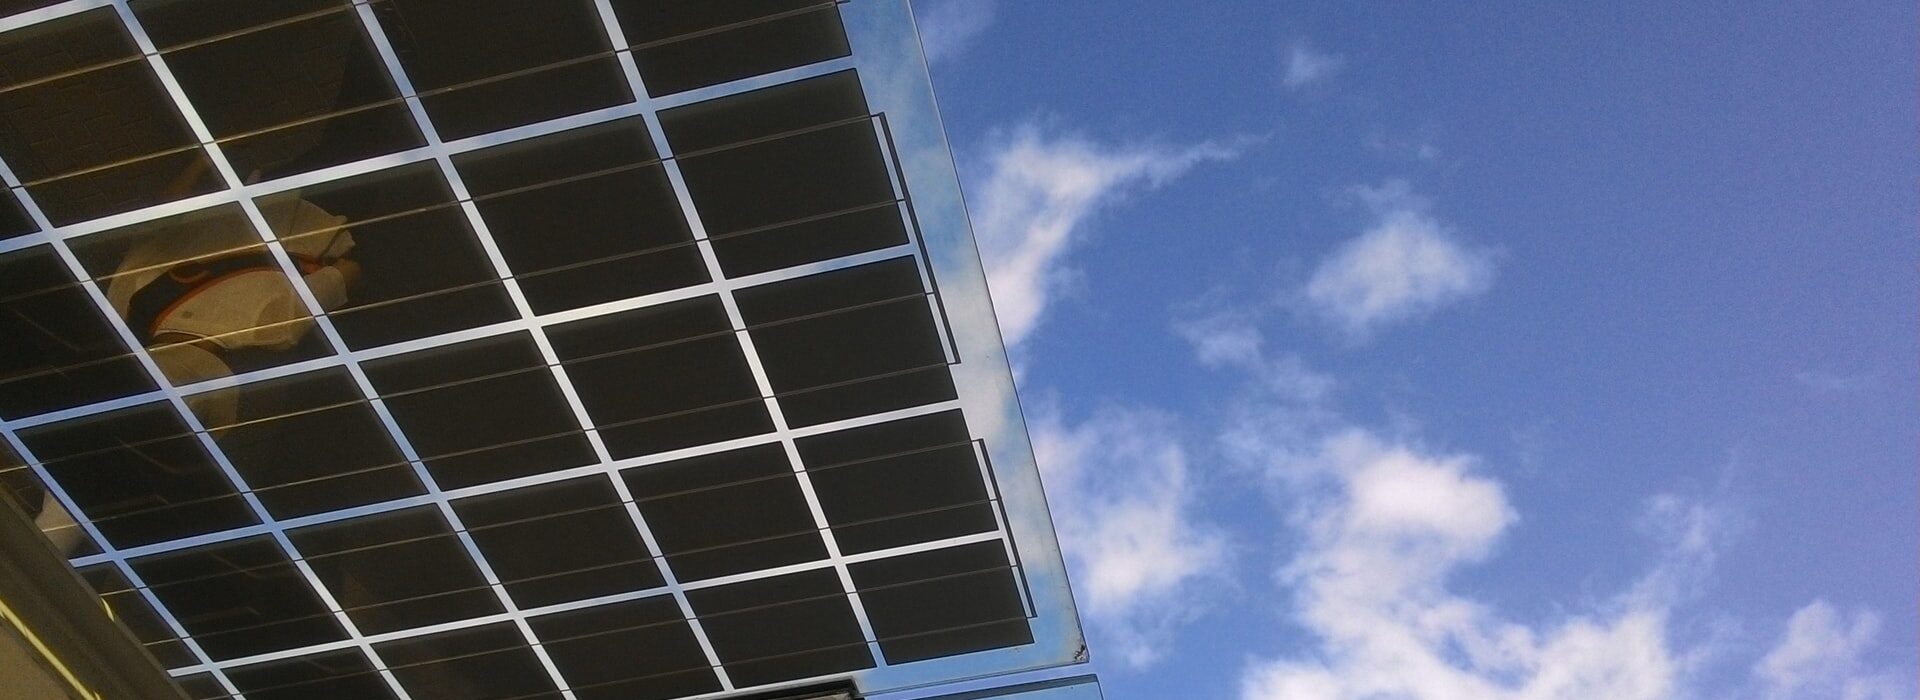 como funciona energia solar - Saiba a importância da energia solar para o meio ambiente e para o seu bolso